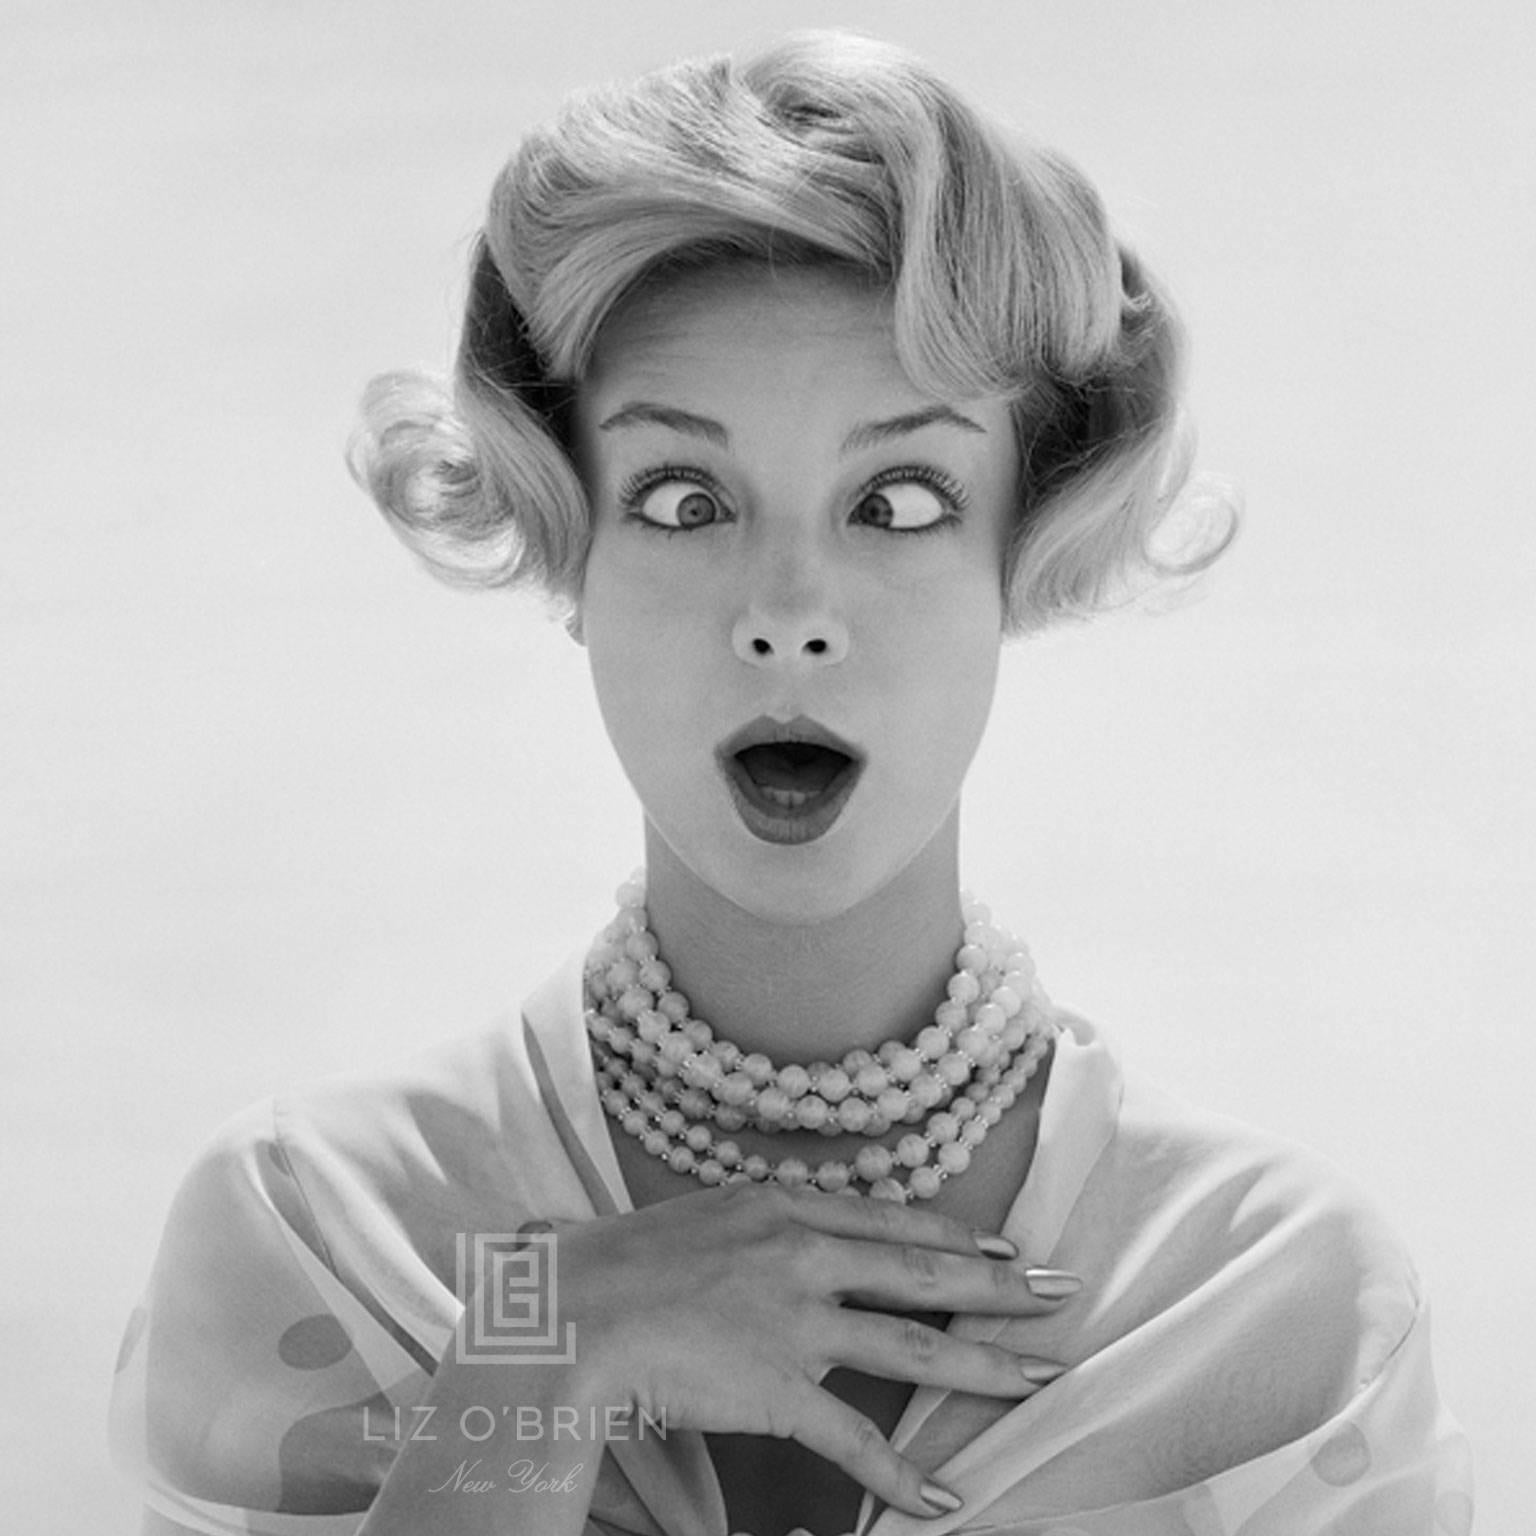 Mark Shaw Black and White Photograph - Mademoiselle Model Having Fun, 1958